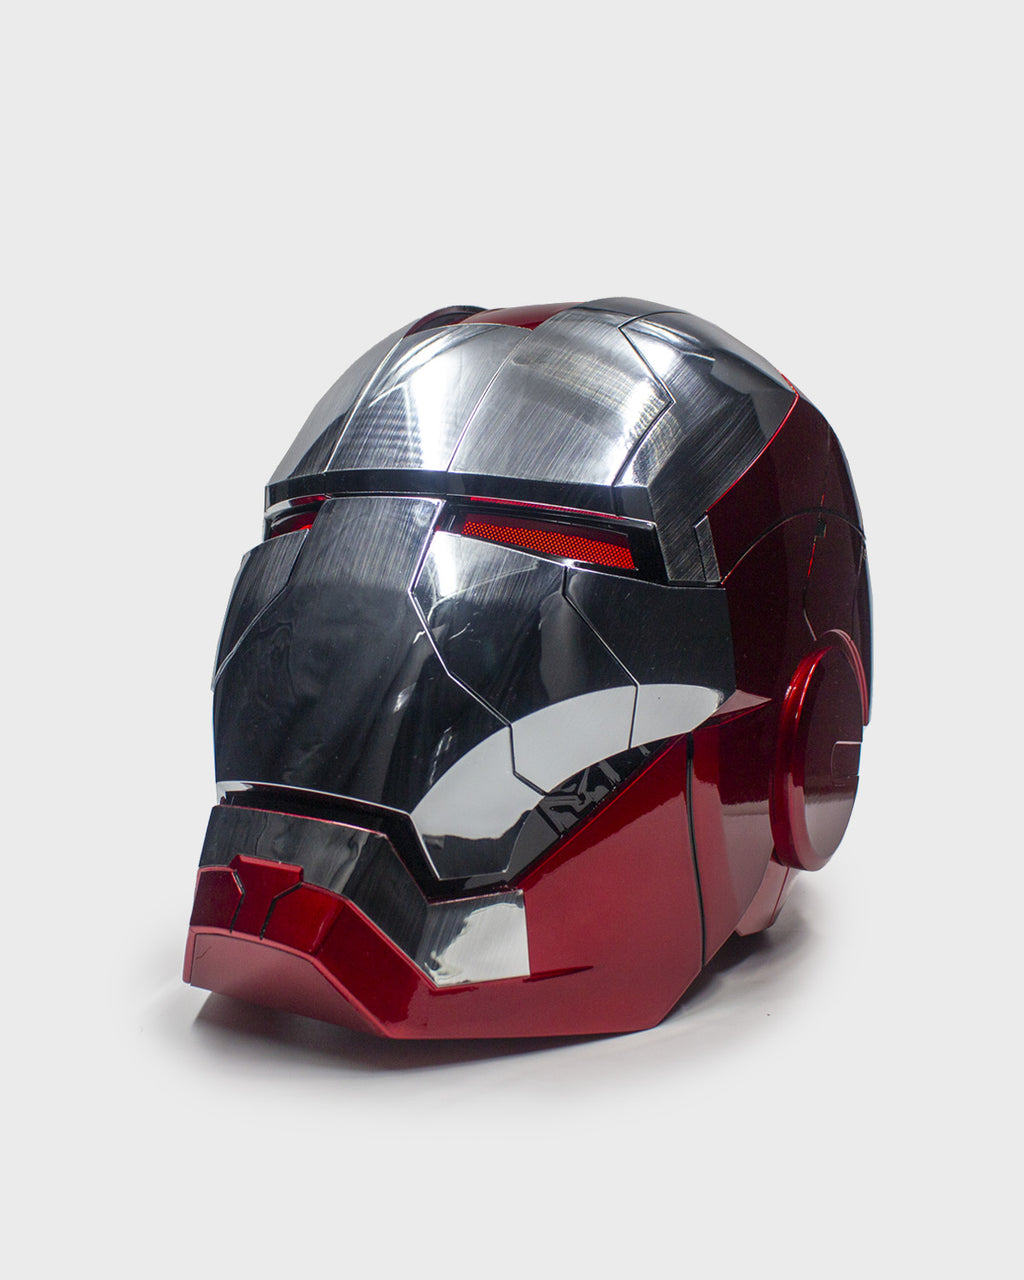 The Iron Man Helmet MK5 Voice Activated